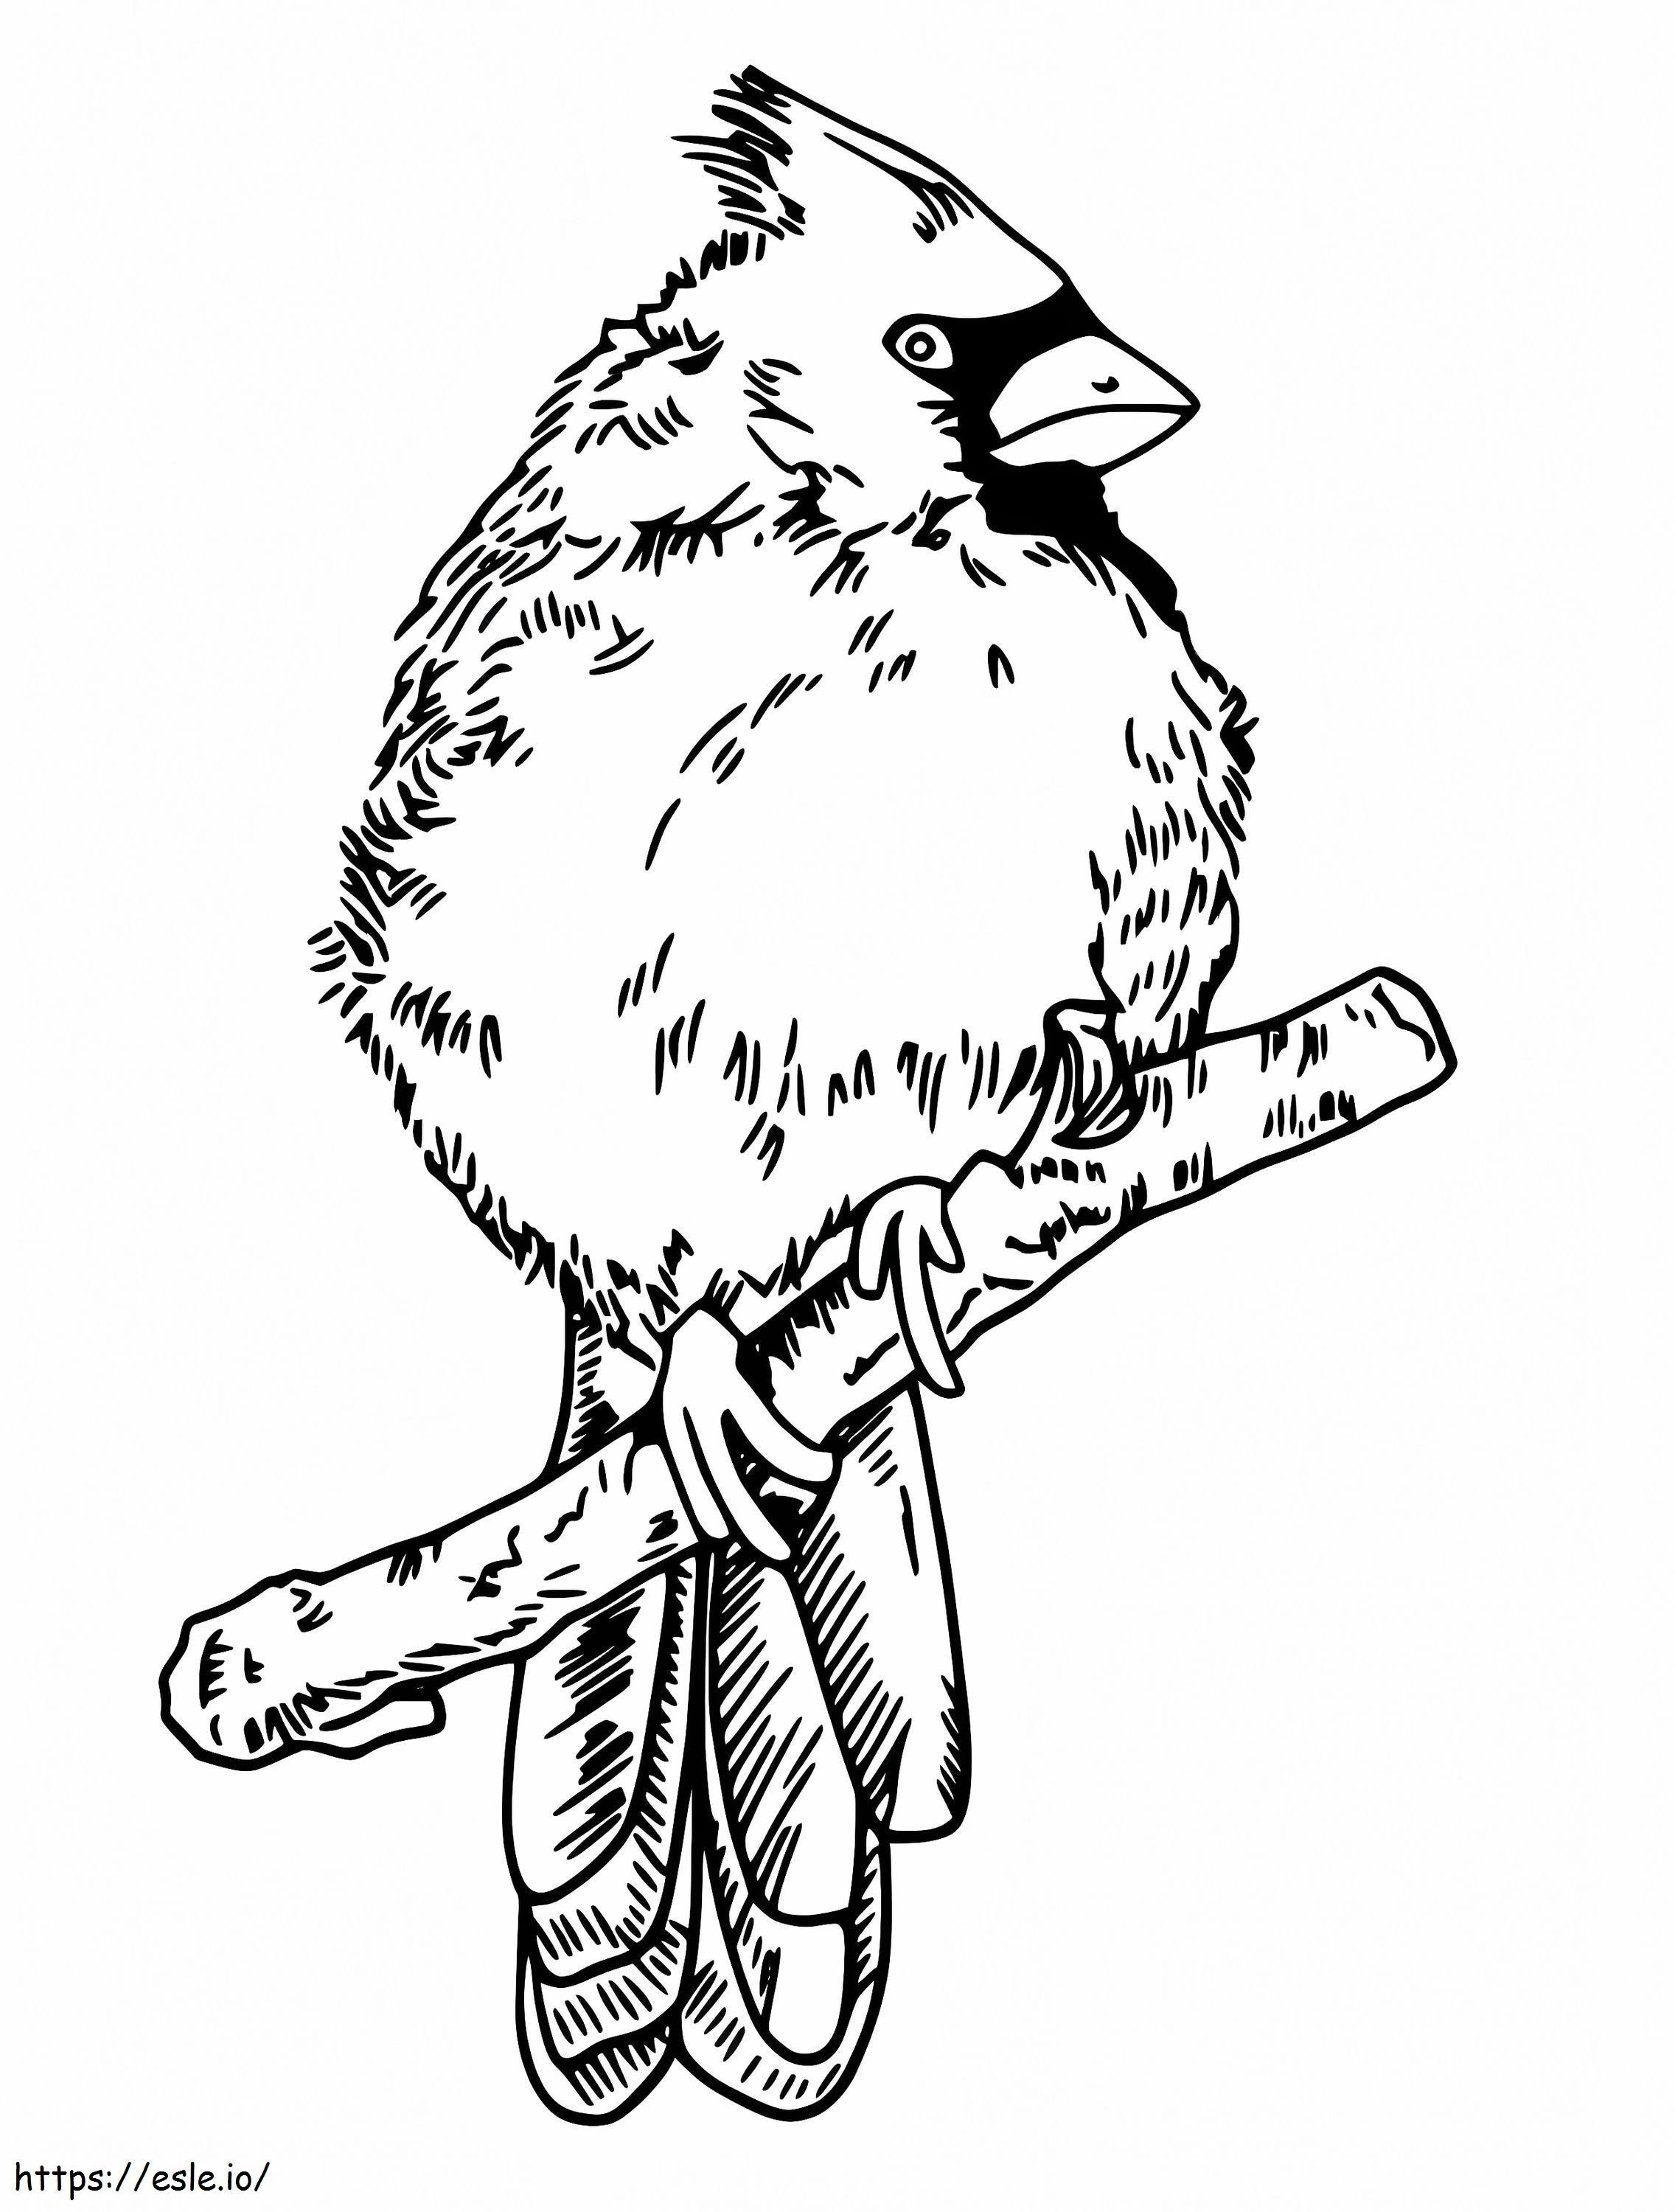 Coloriage Oiseau cardinal gratuit à imprimer dessin